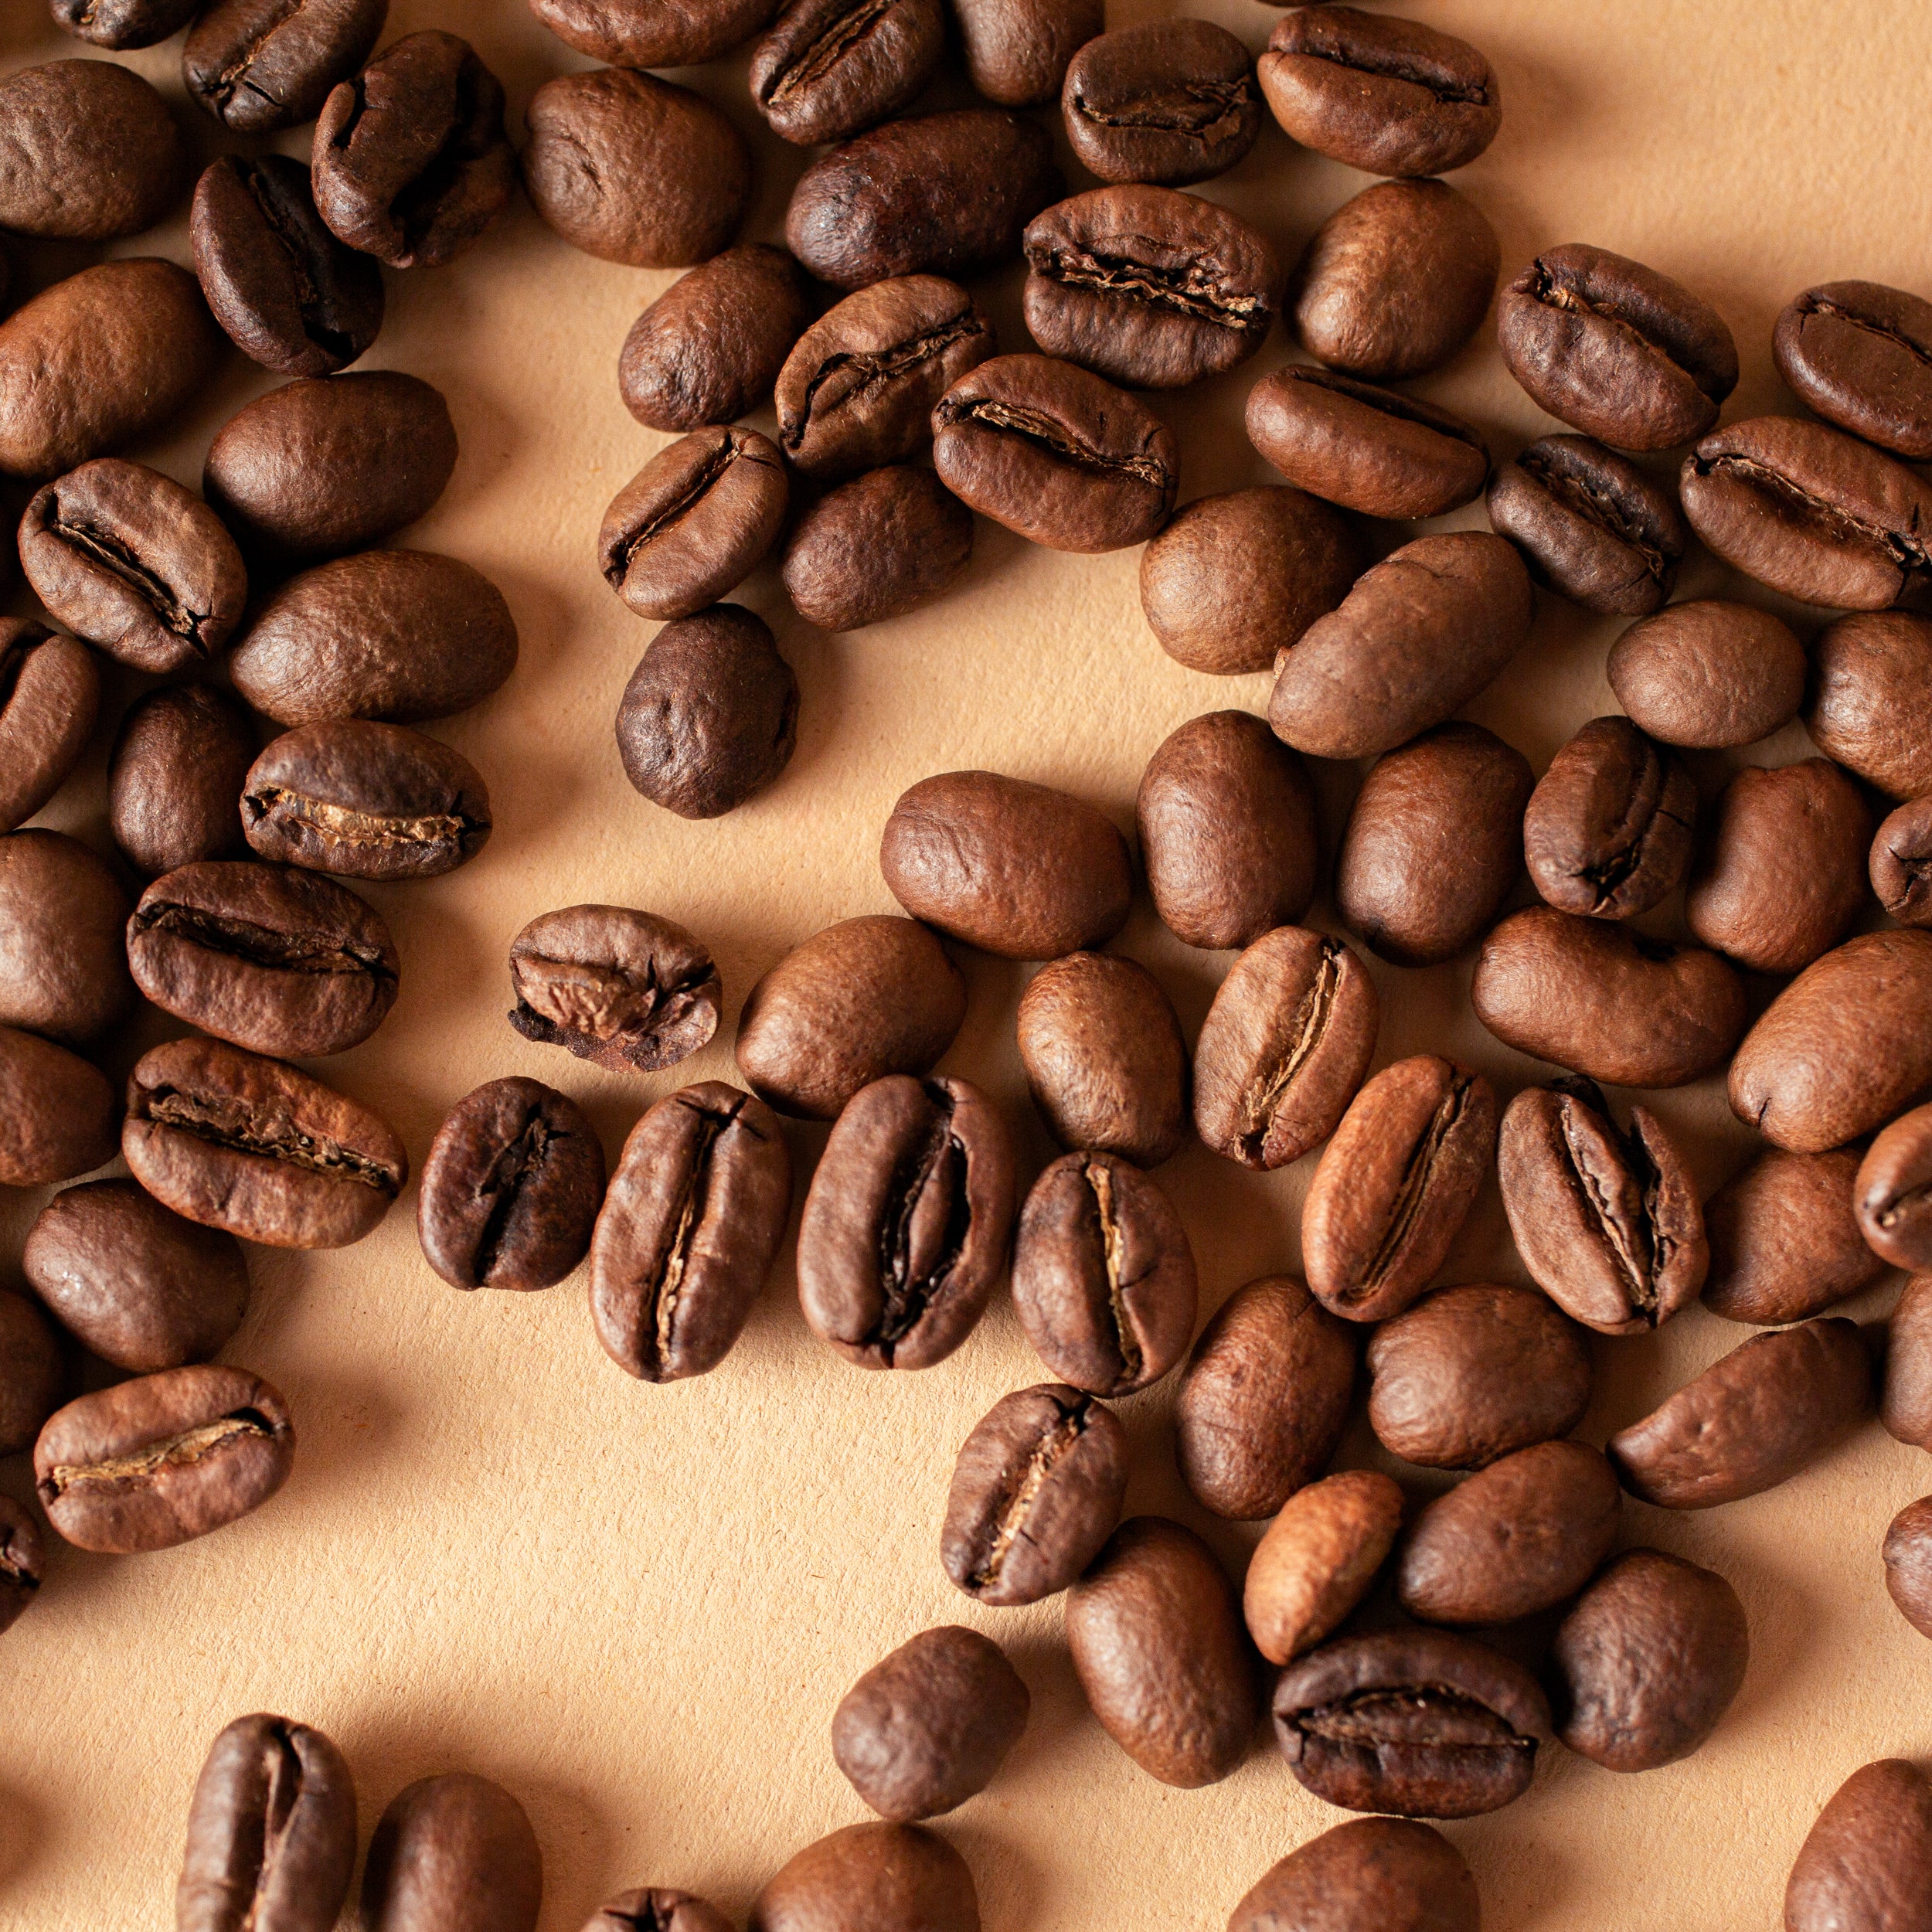 Origin & Story: Ethiopian Coffee